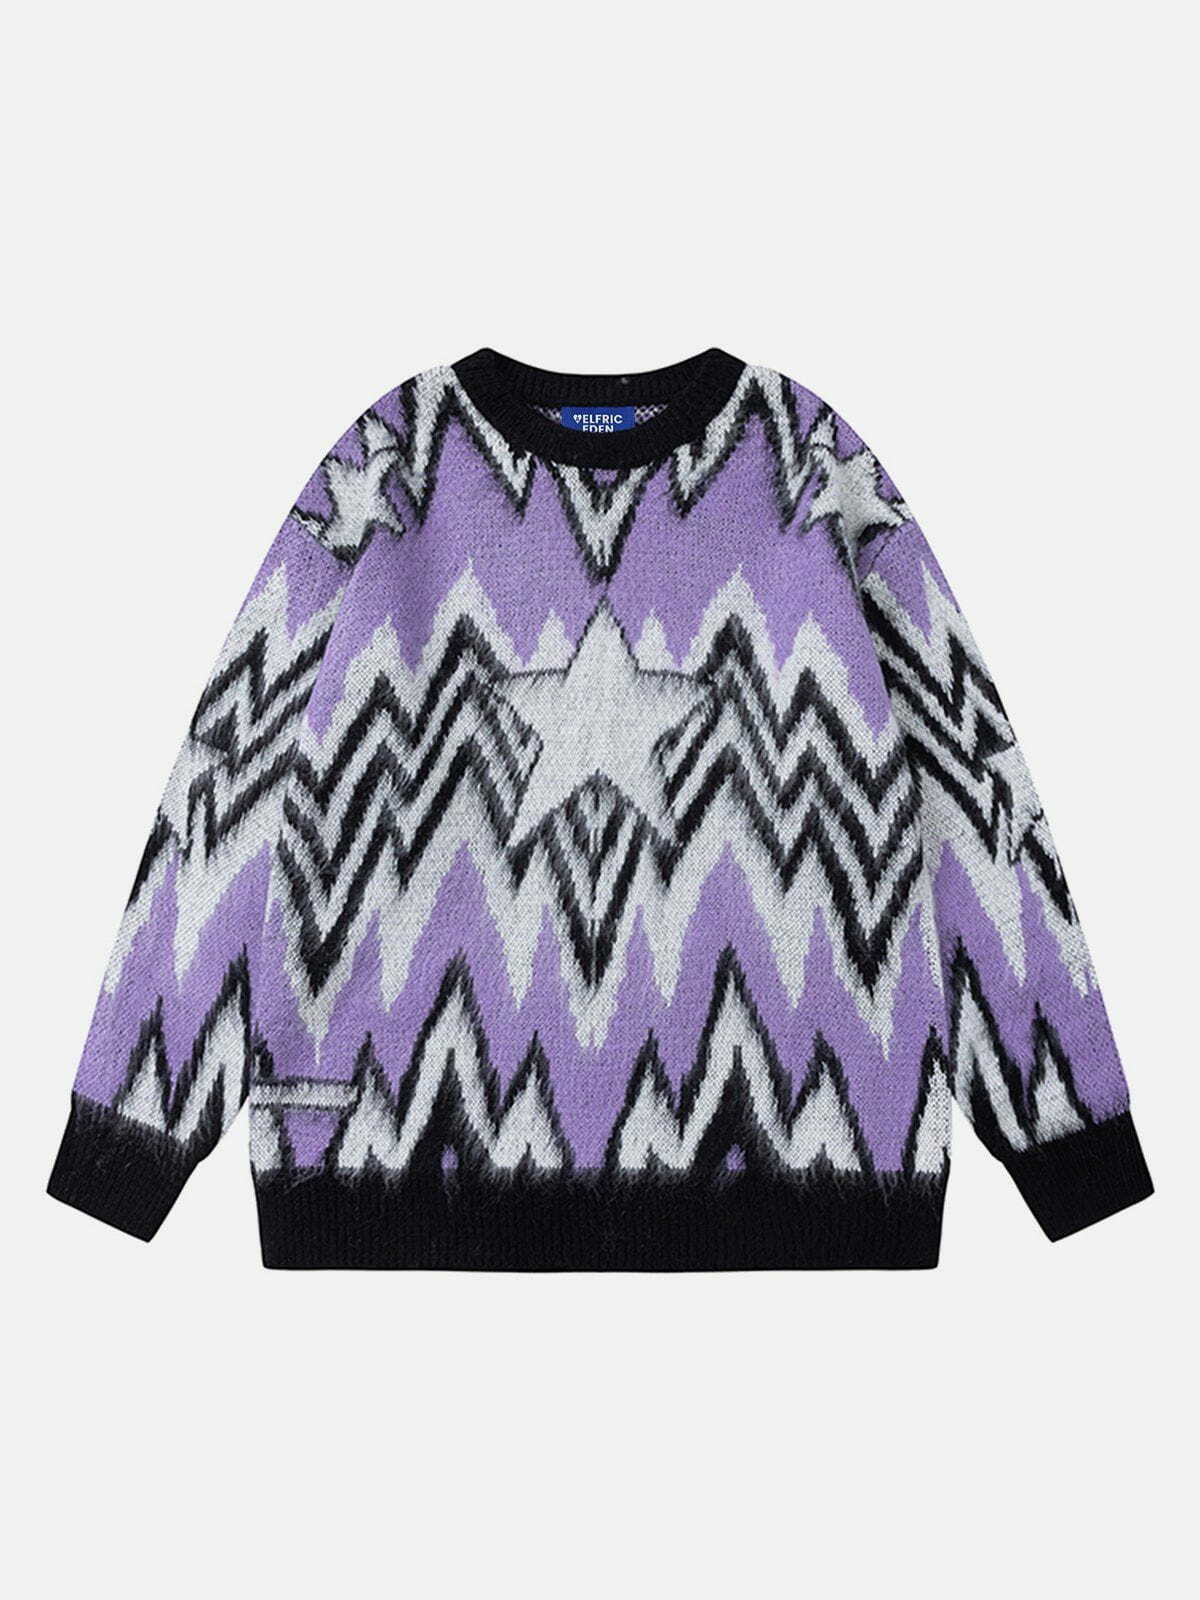 youthful wavy star sweater   chic & trending design 4538